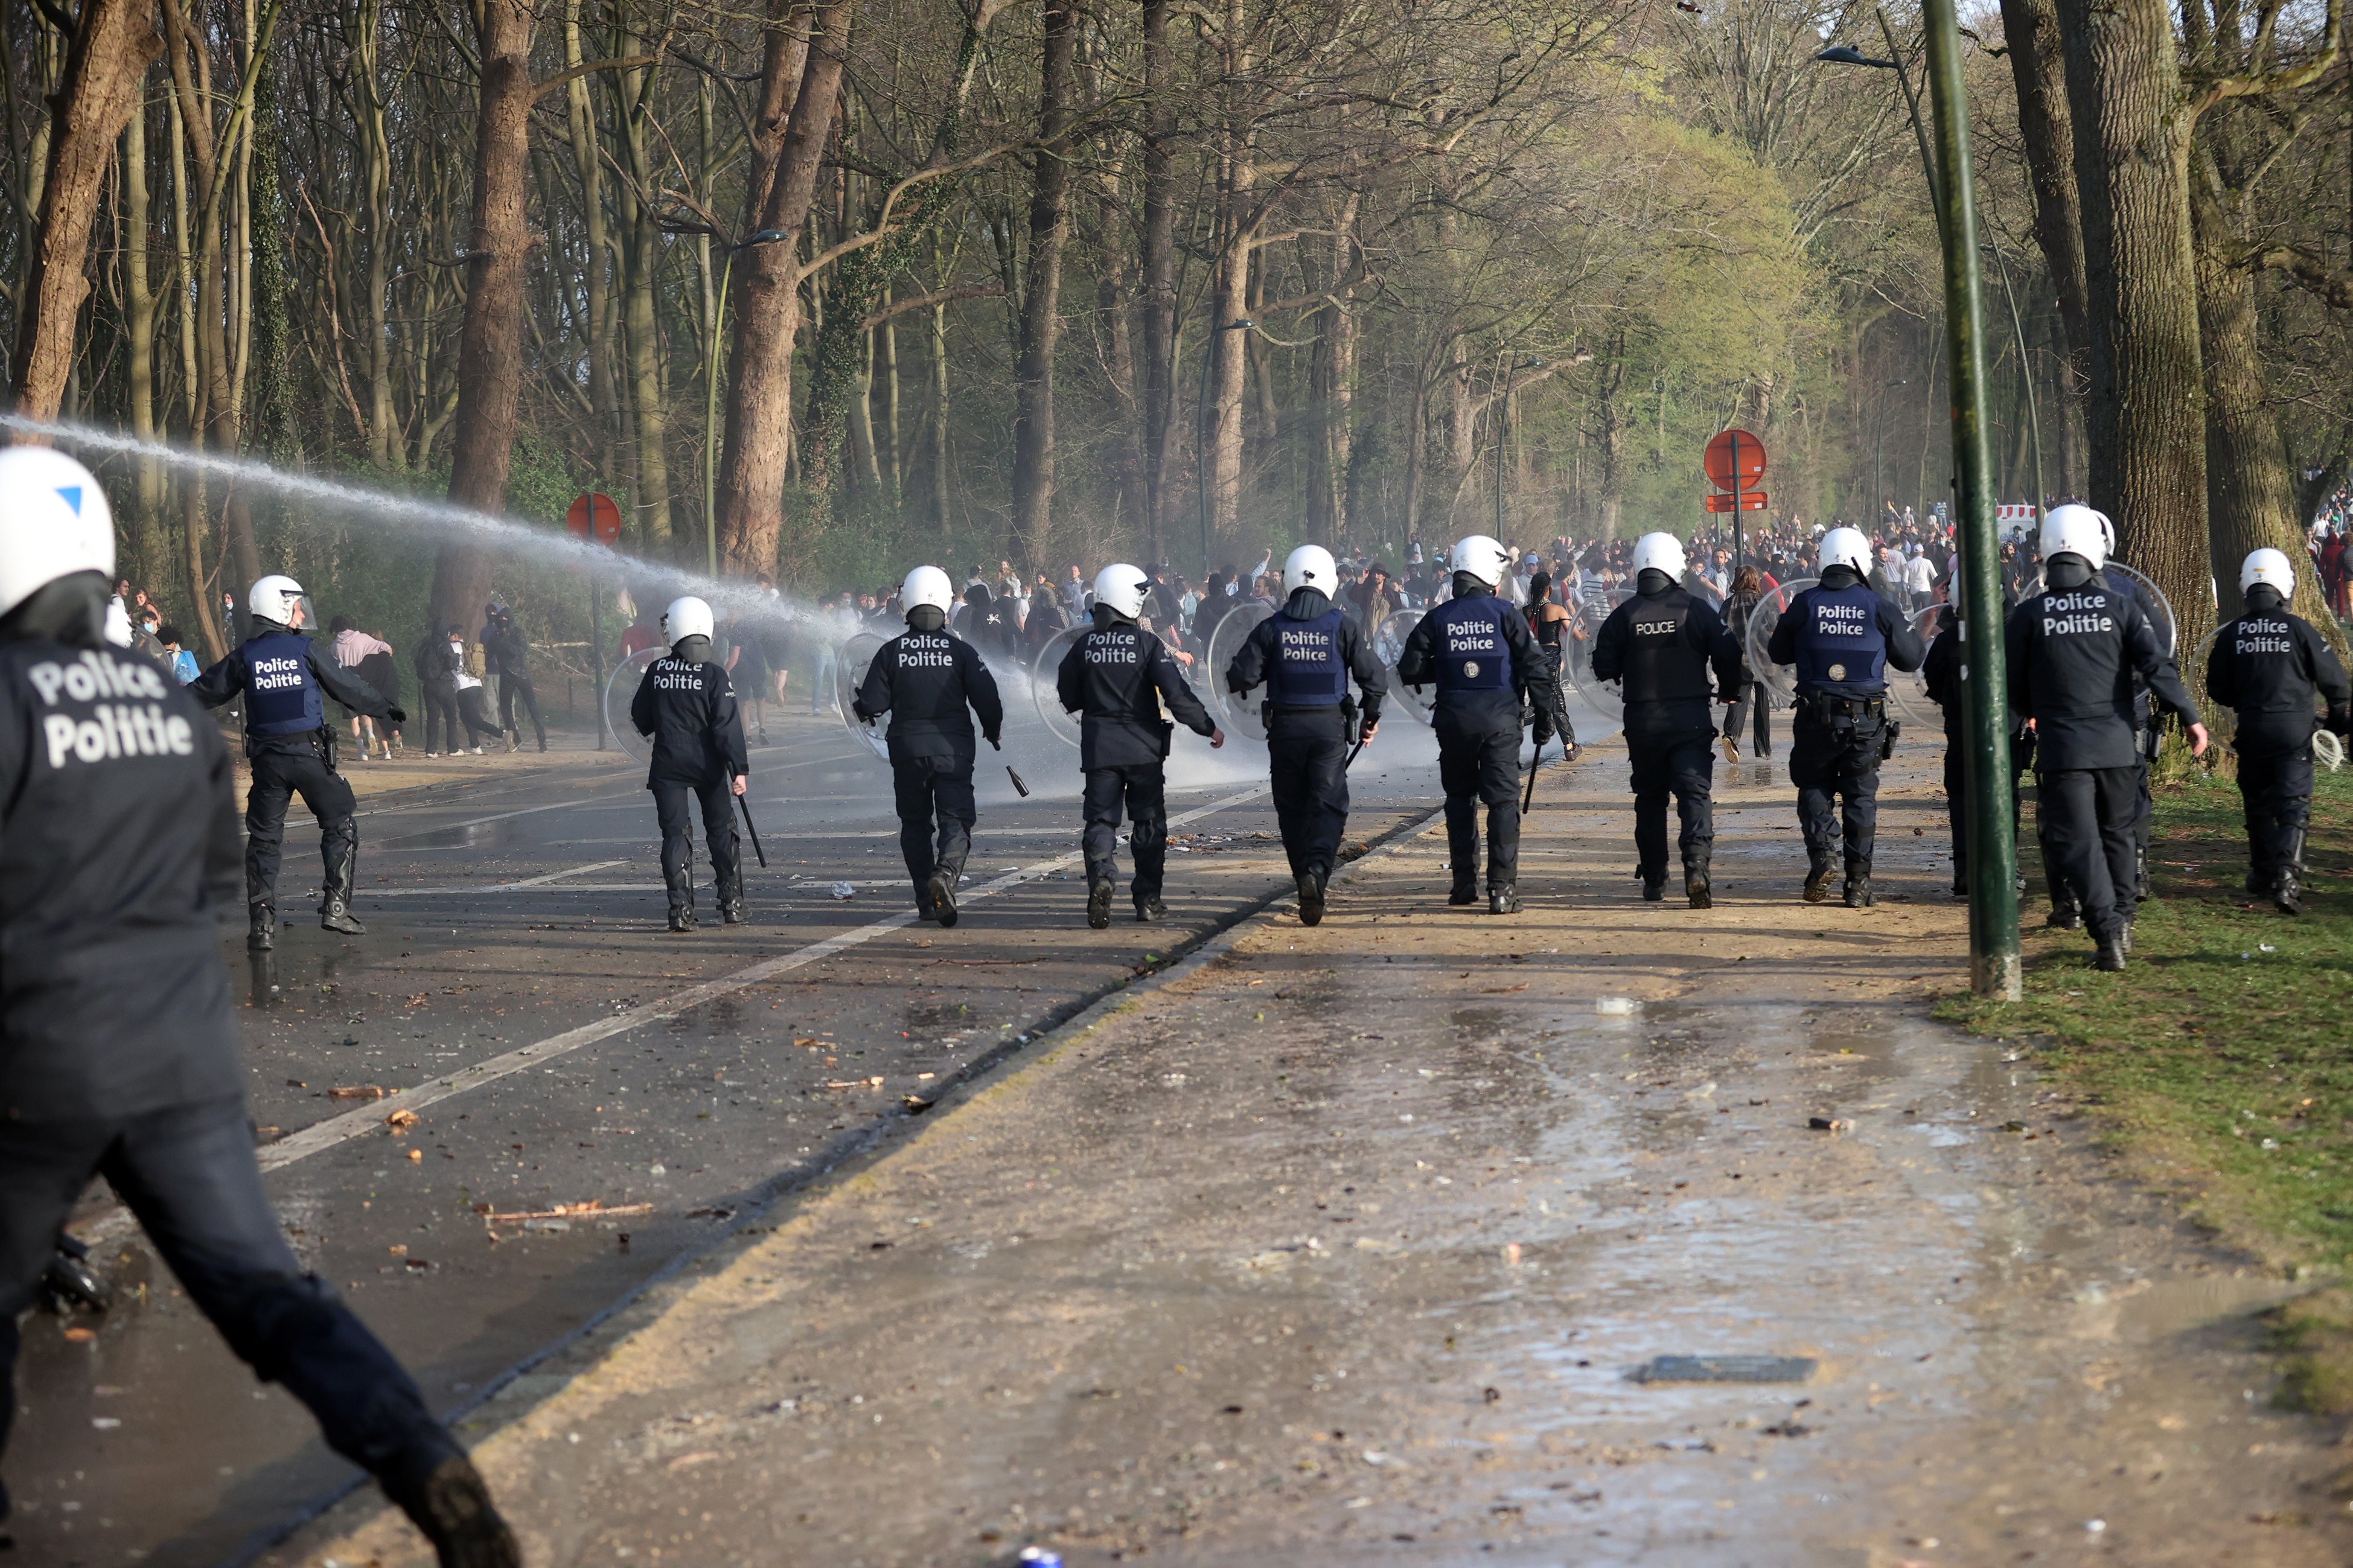 Police intervene in crowd gathered for April foolsâ joke in Brussels